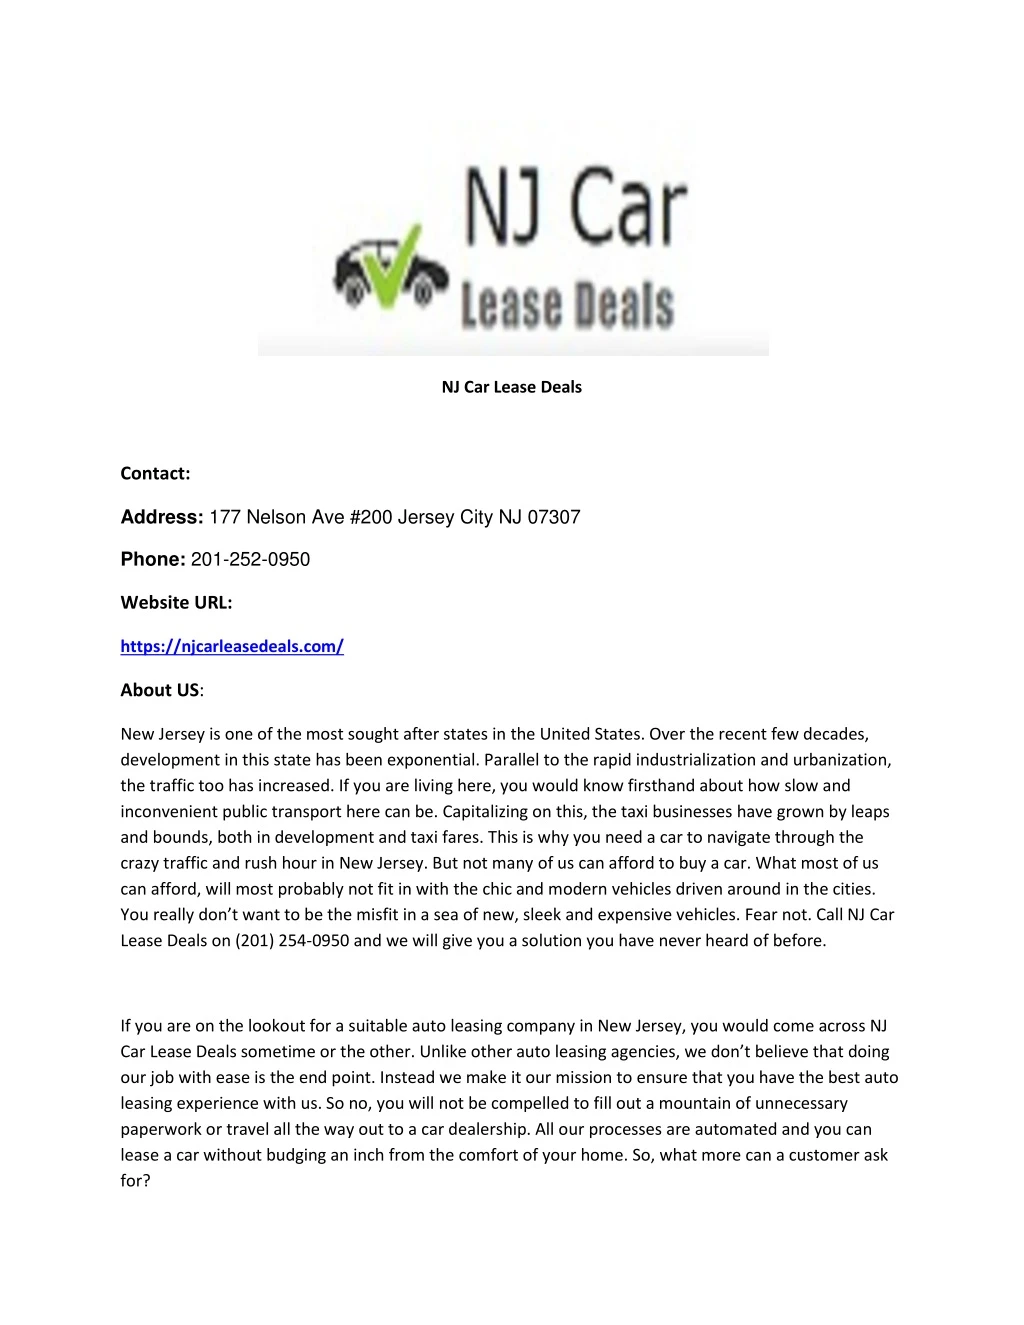 nj car lease deals